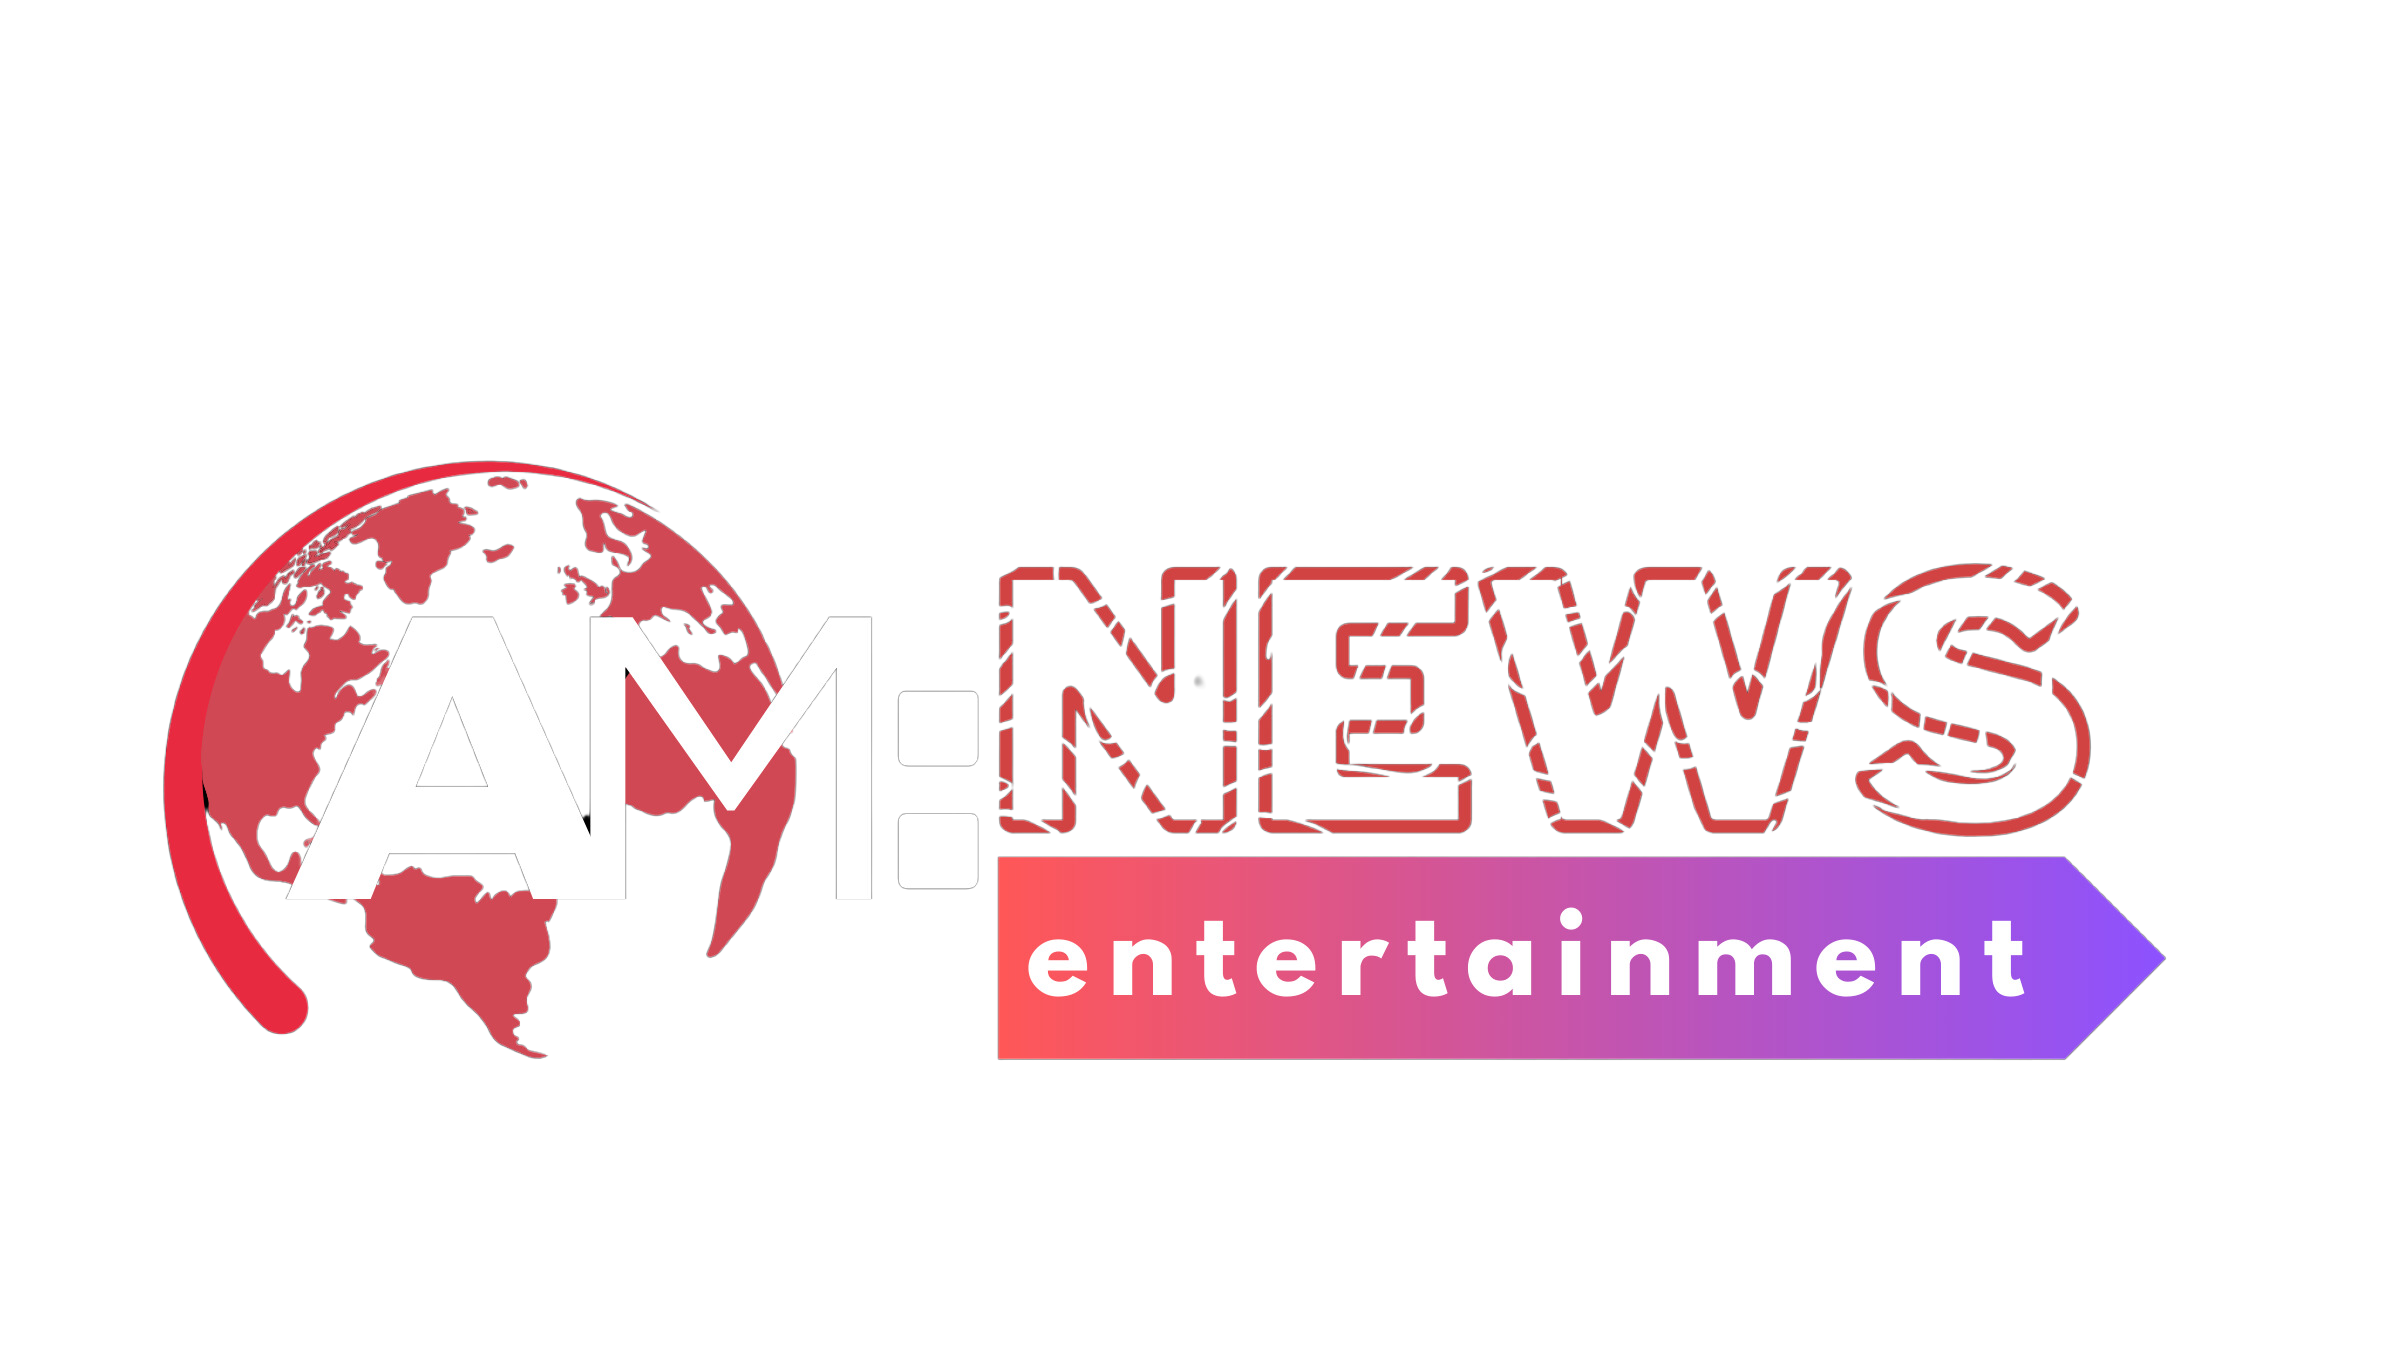 AM News Entertainment